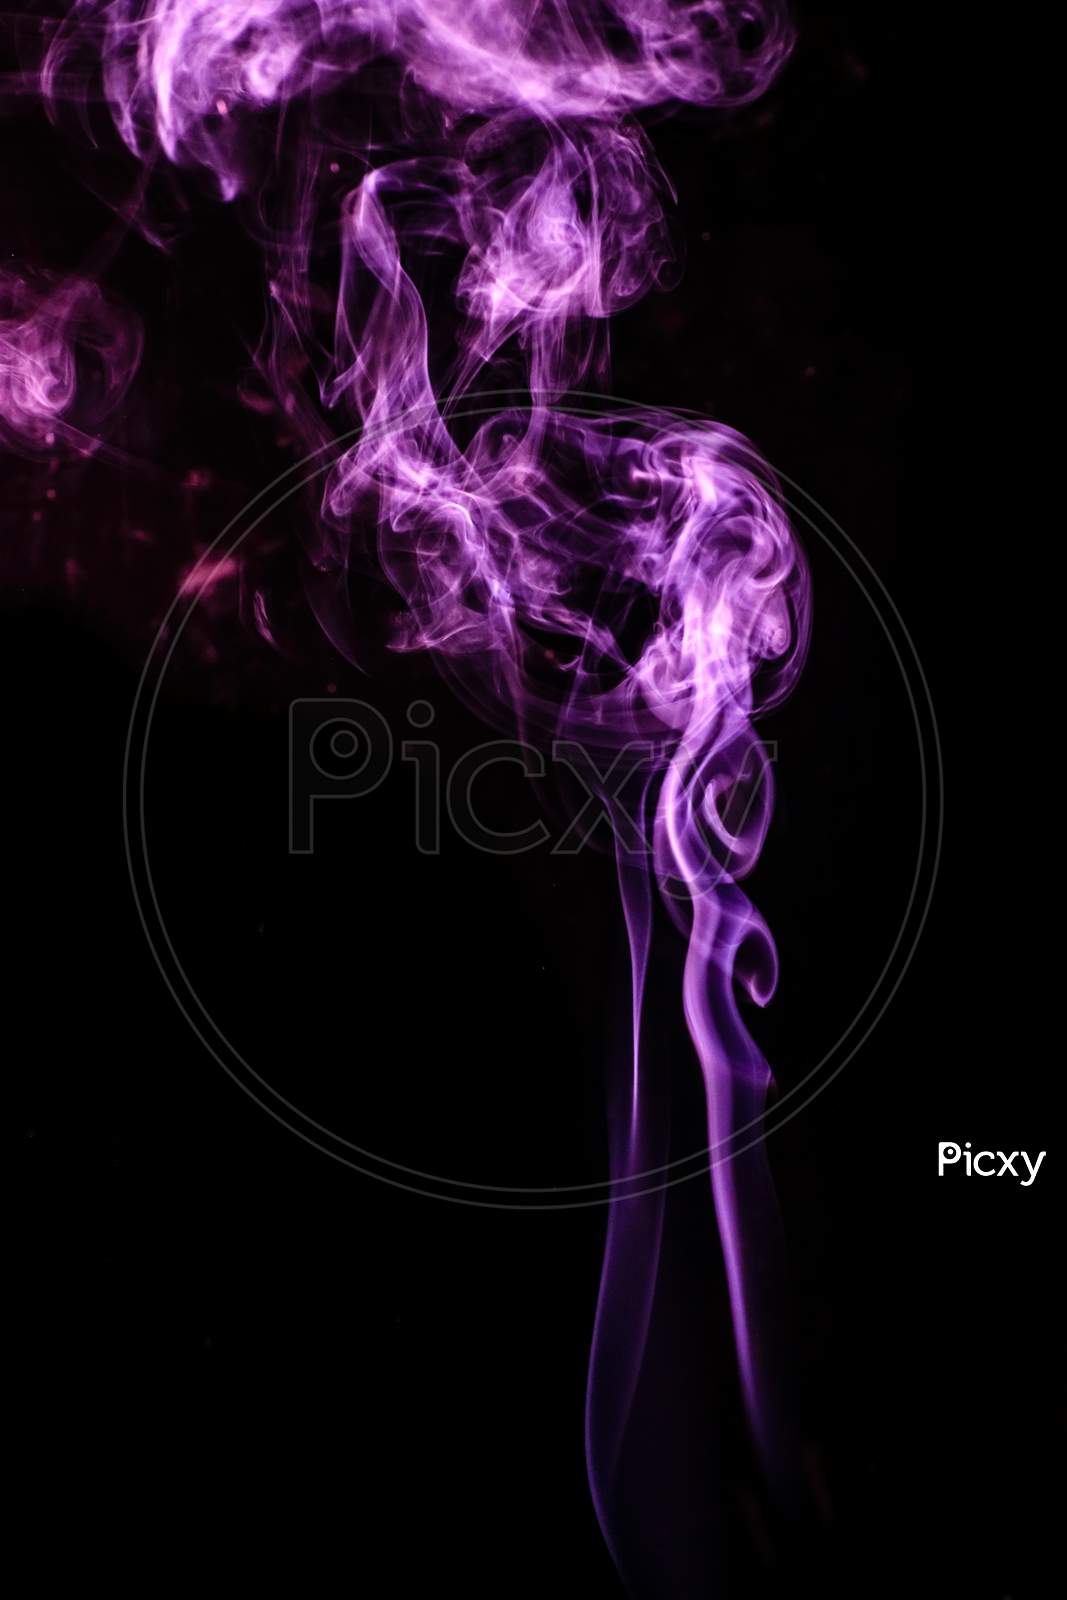 Purple Colored Puffed Smoke In A Dark Background